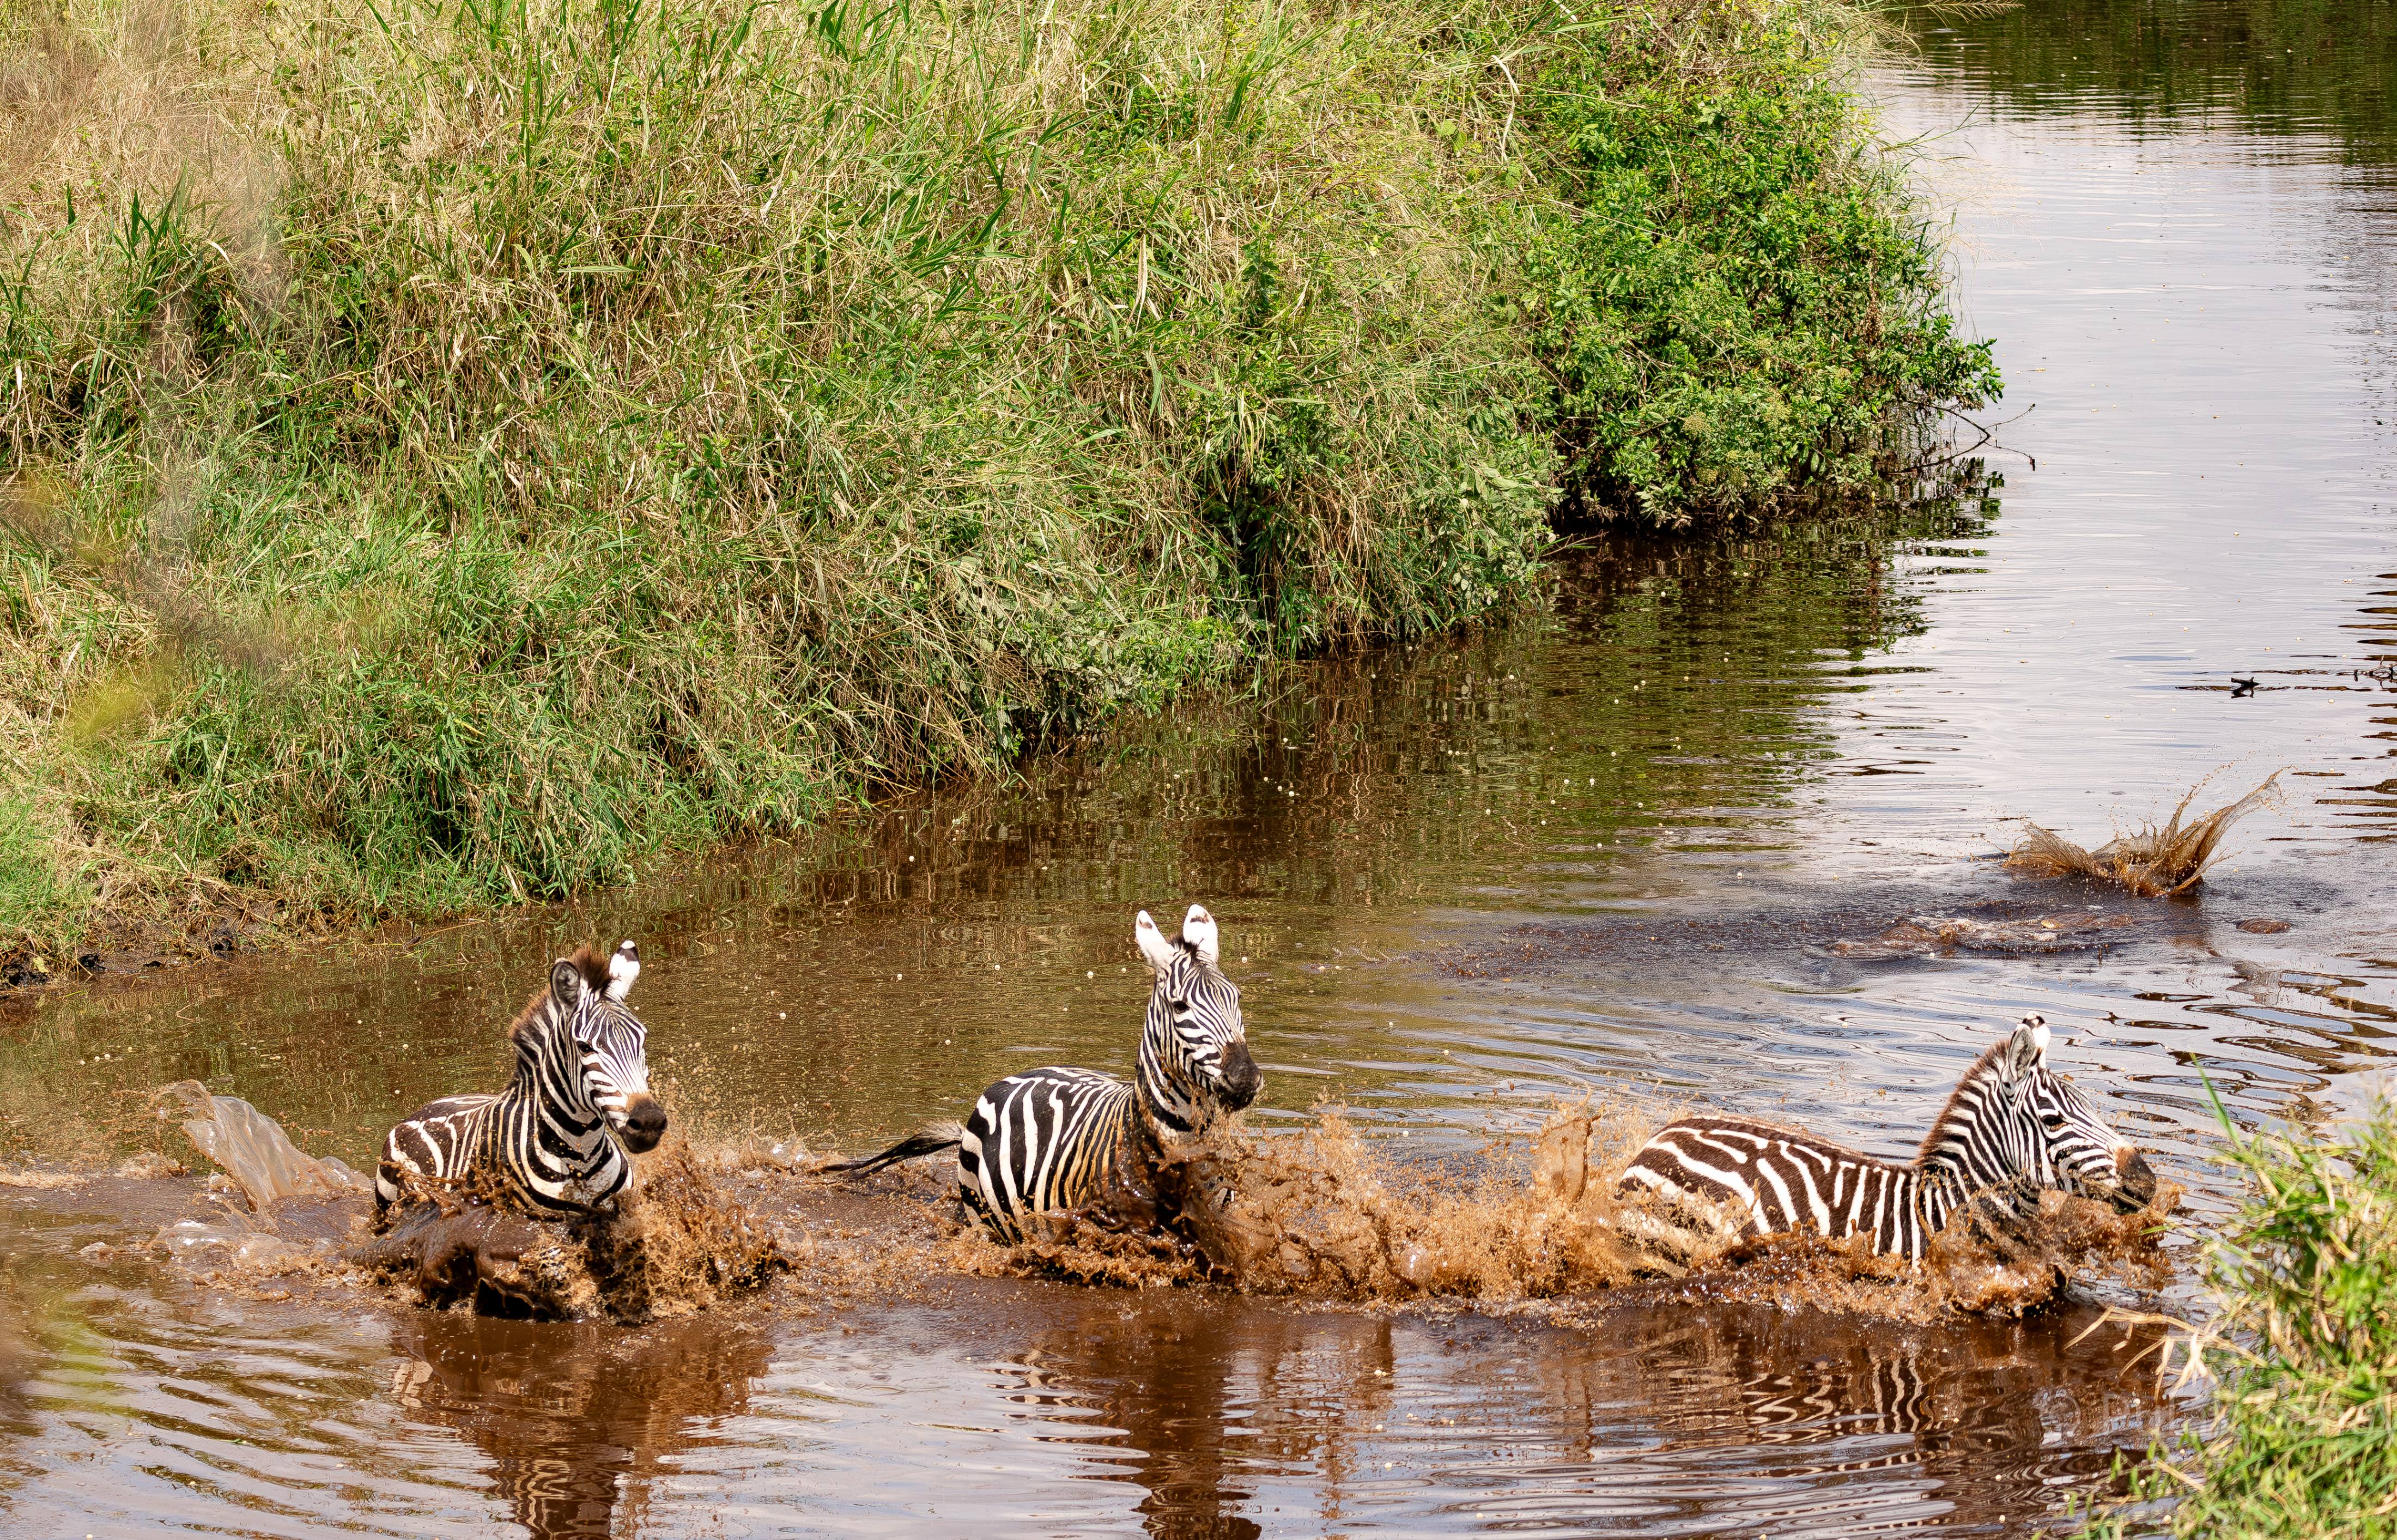 Zebra running through a stream